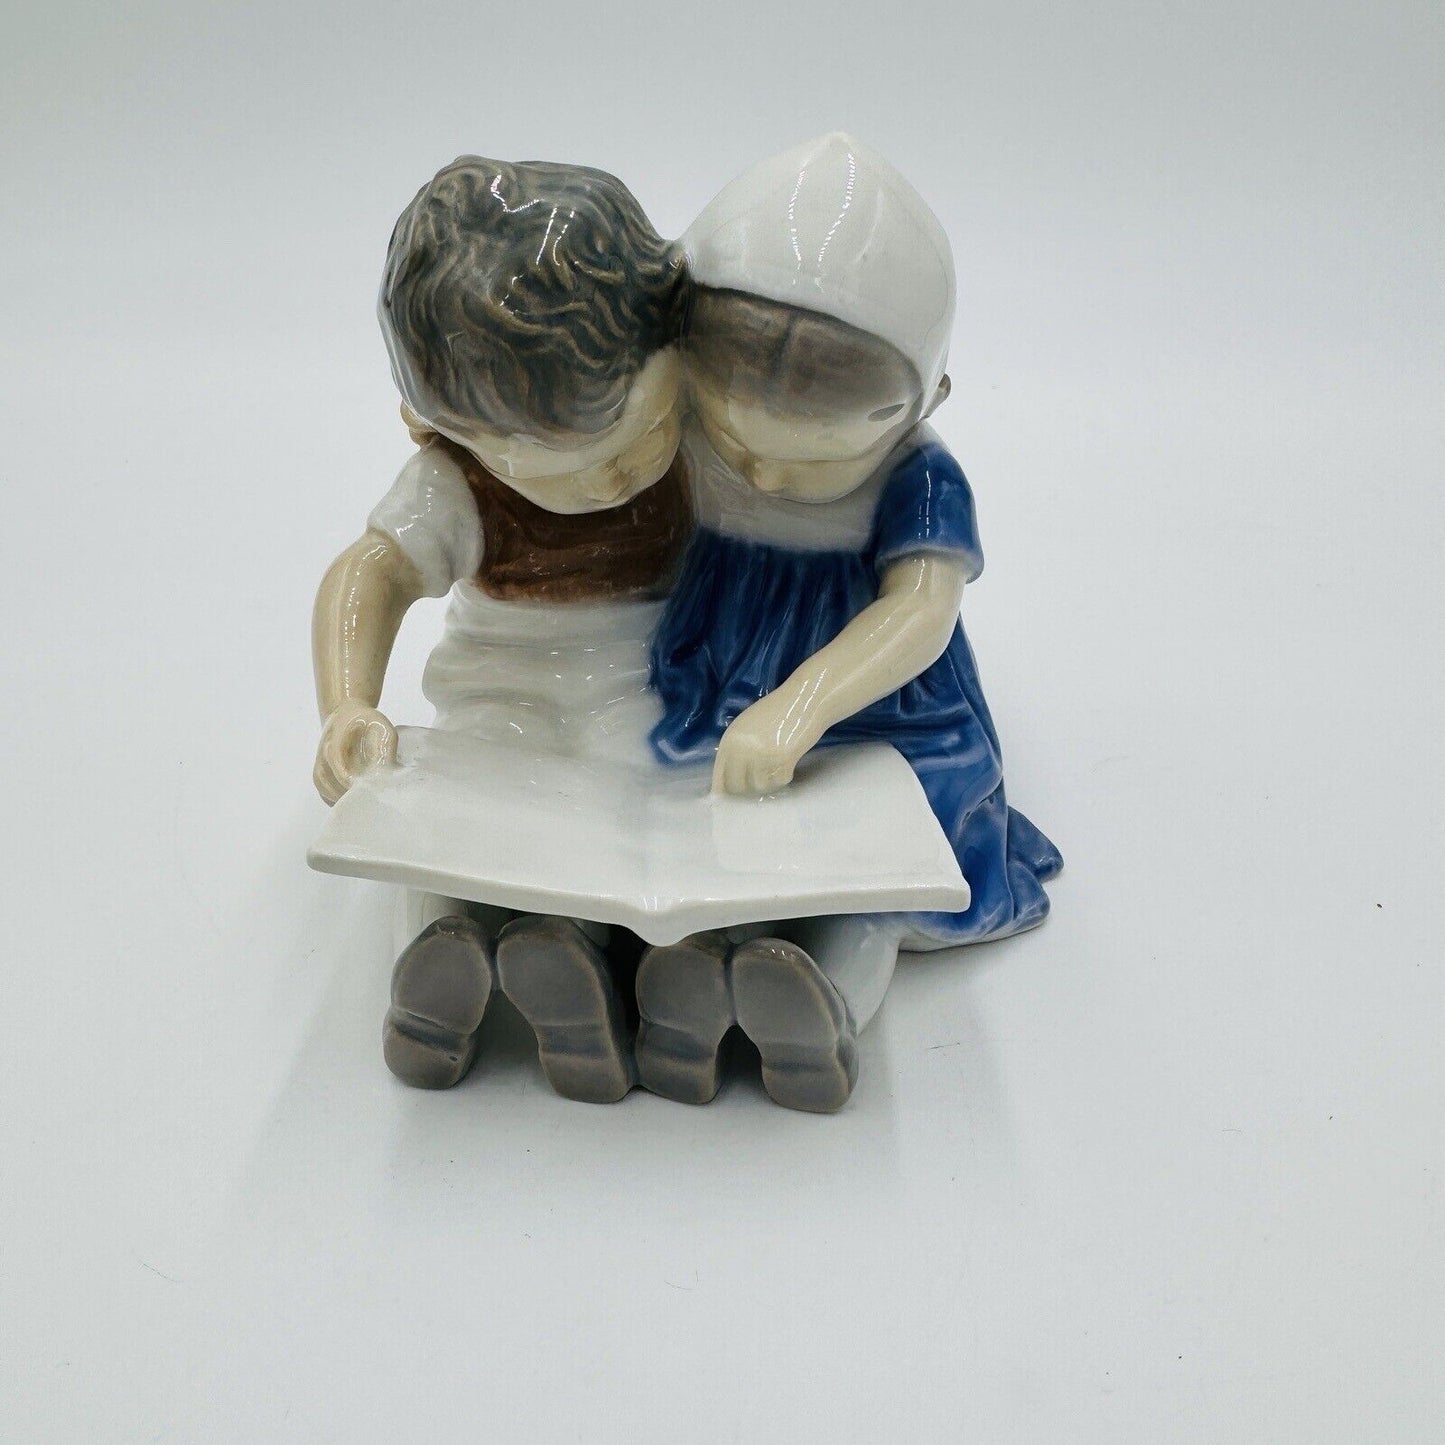 Vintage Bing and Grondahl Denmark 1567 Boy & Girl Reading Porcelain Figurine